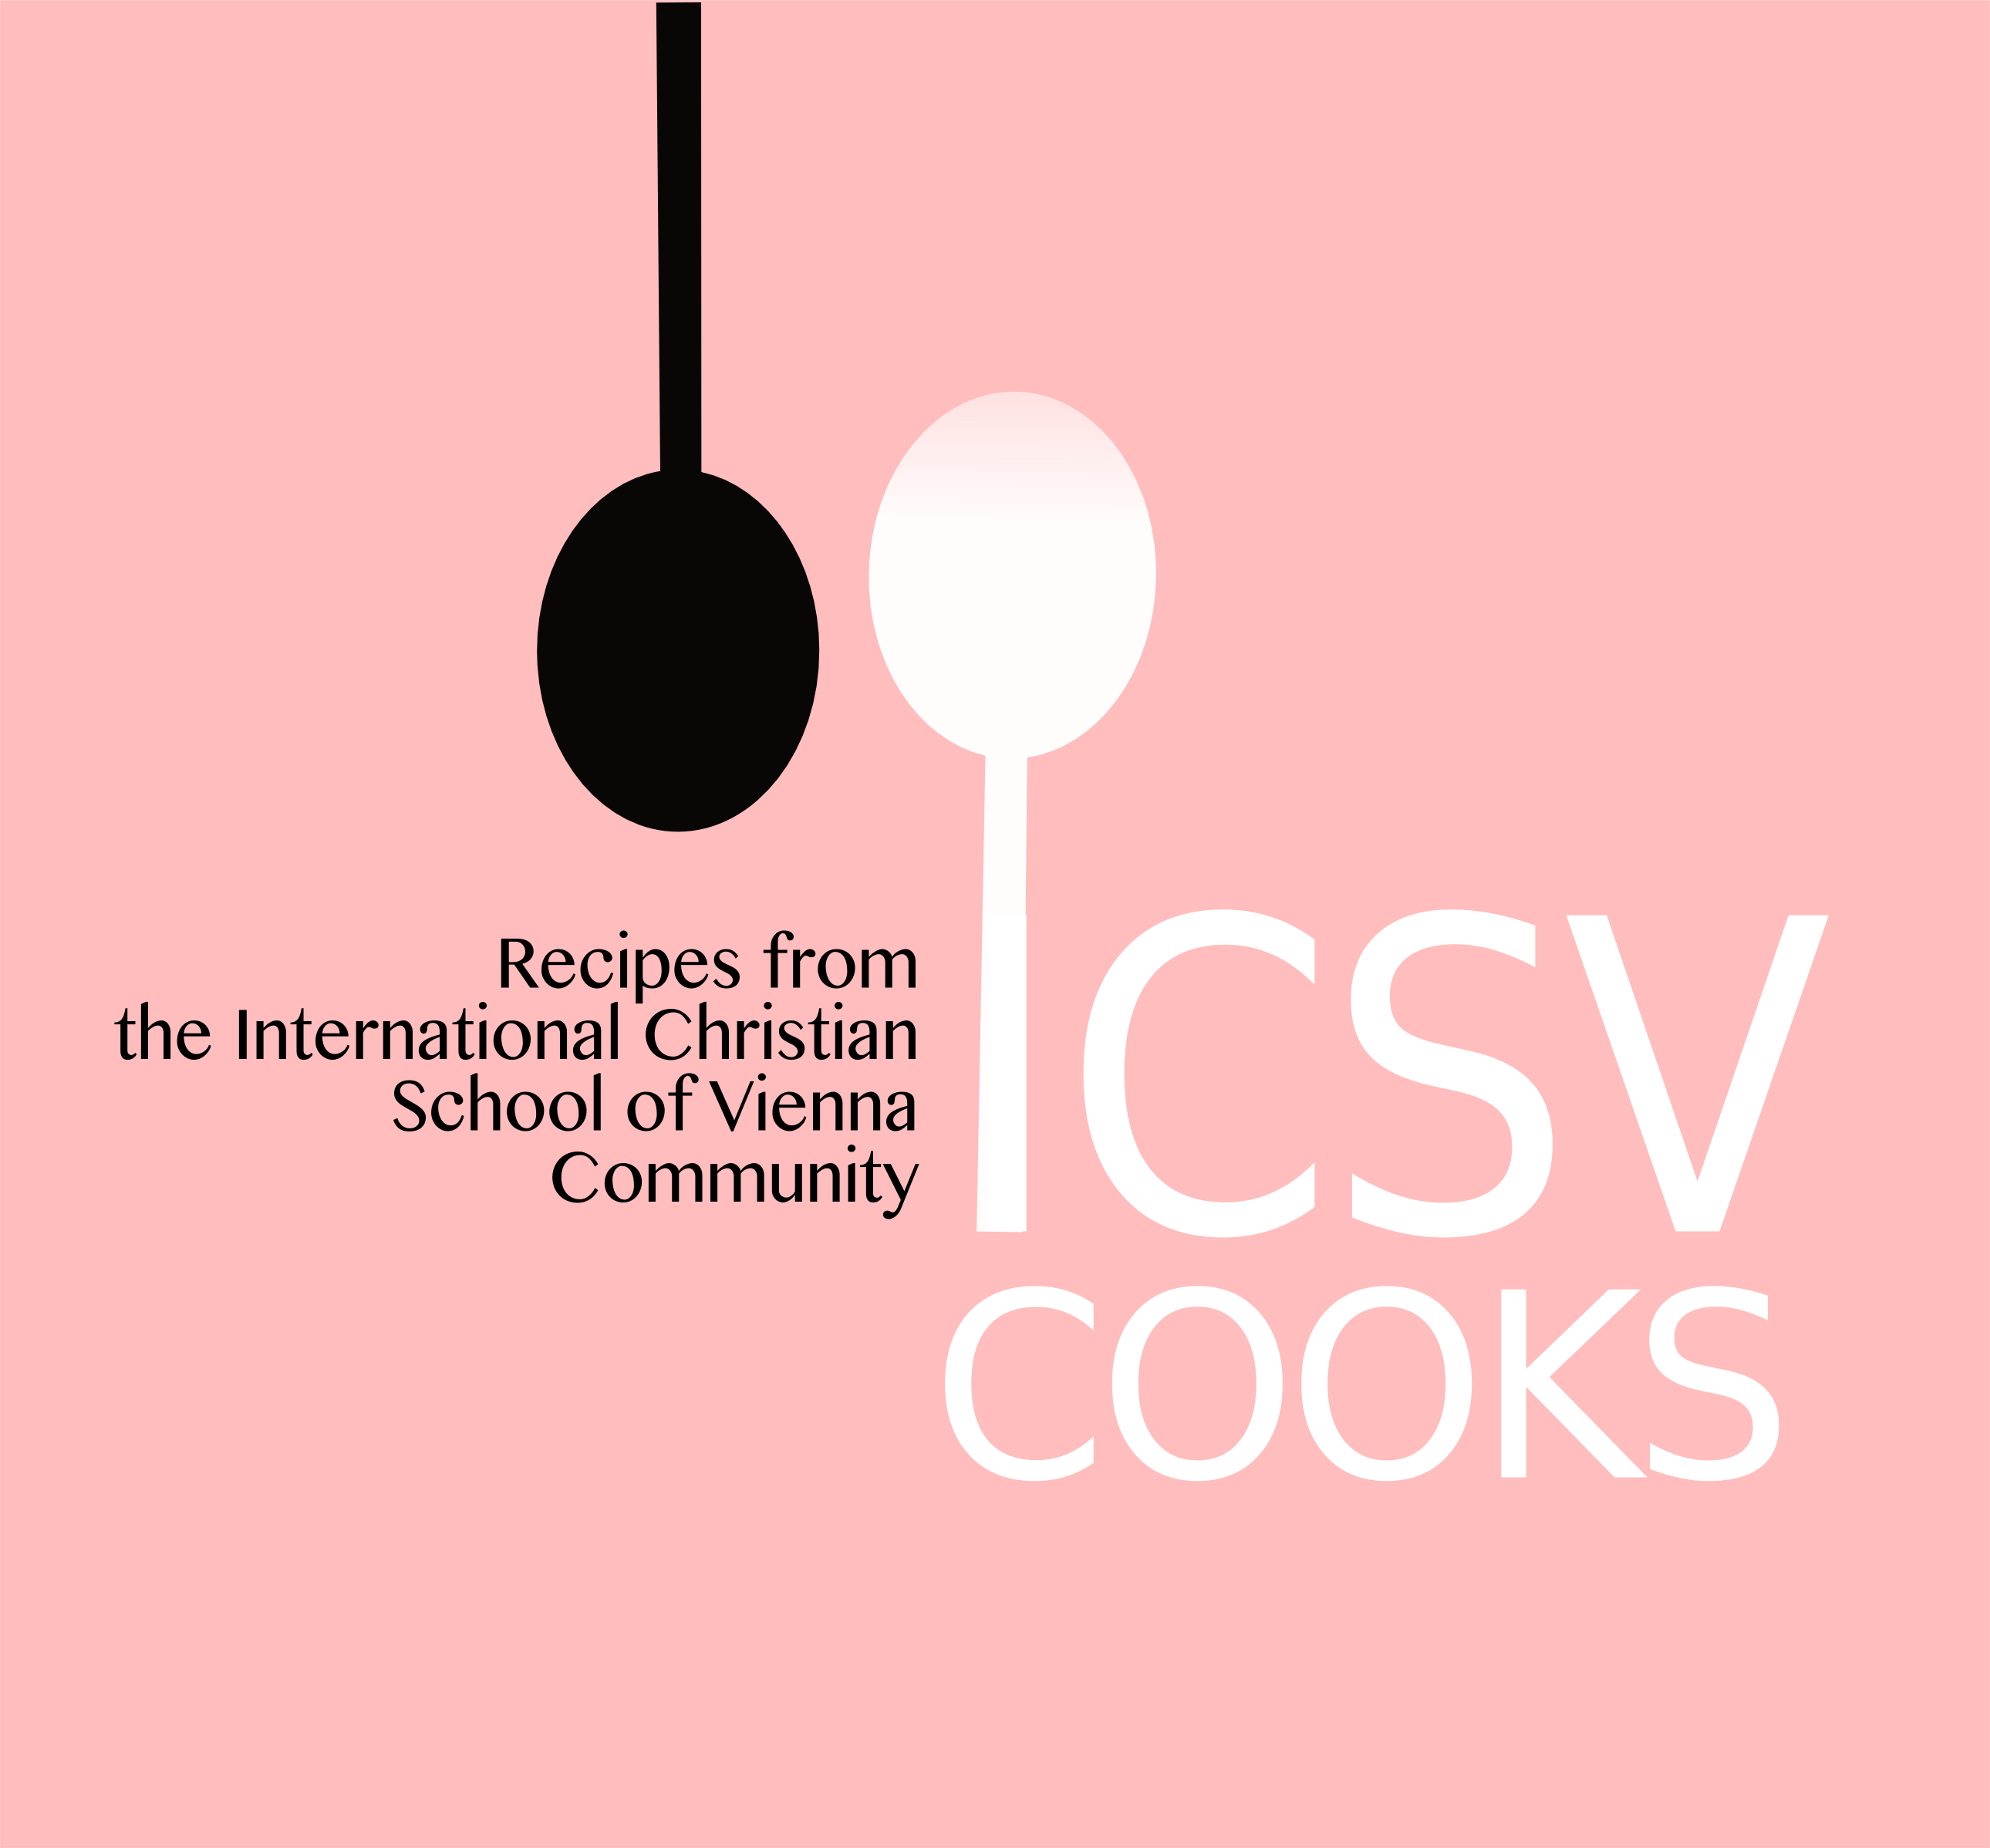 cookbook clipart cookbook covers